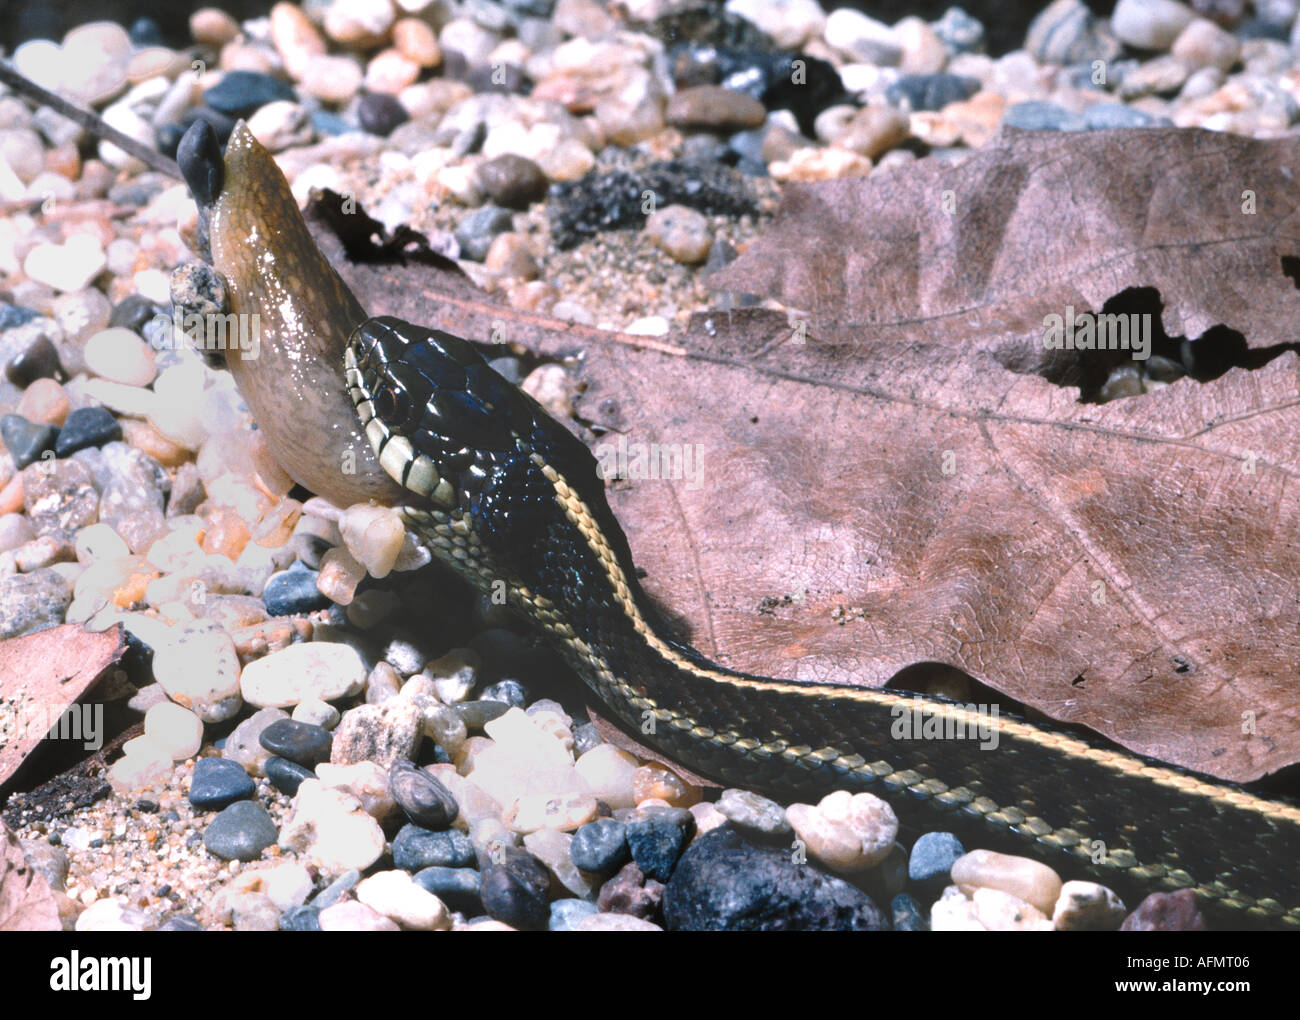 22057 Western Garter Snake Thamnophis Elegans Eating A Slug